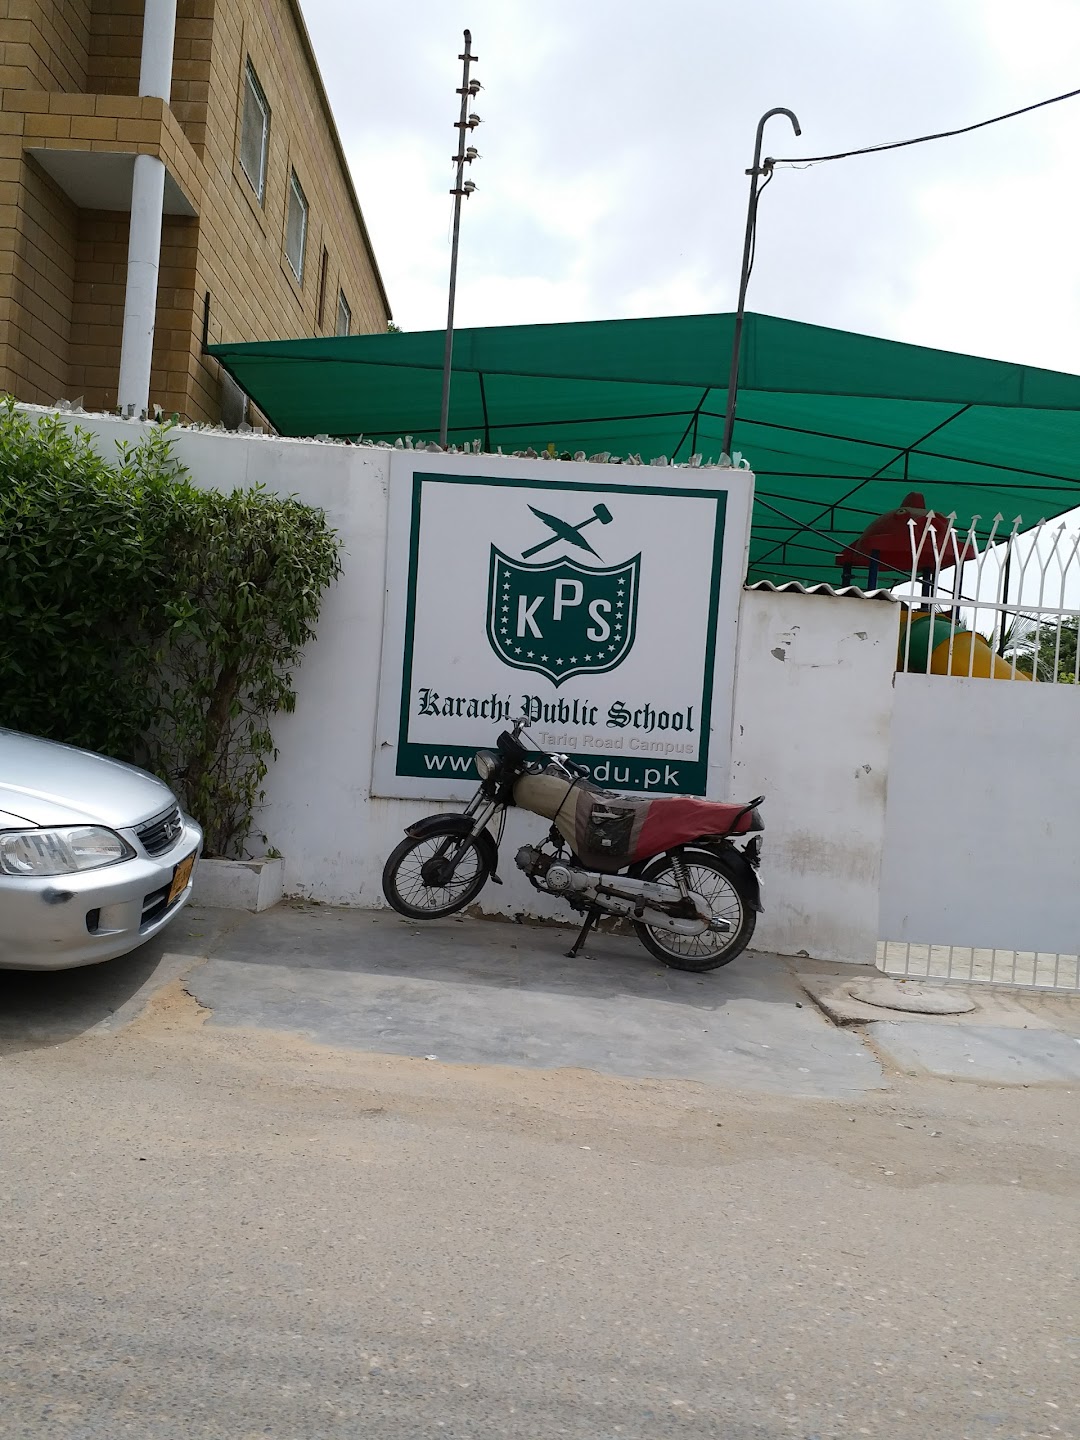 Karachi Public School - P.E.C.H.S